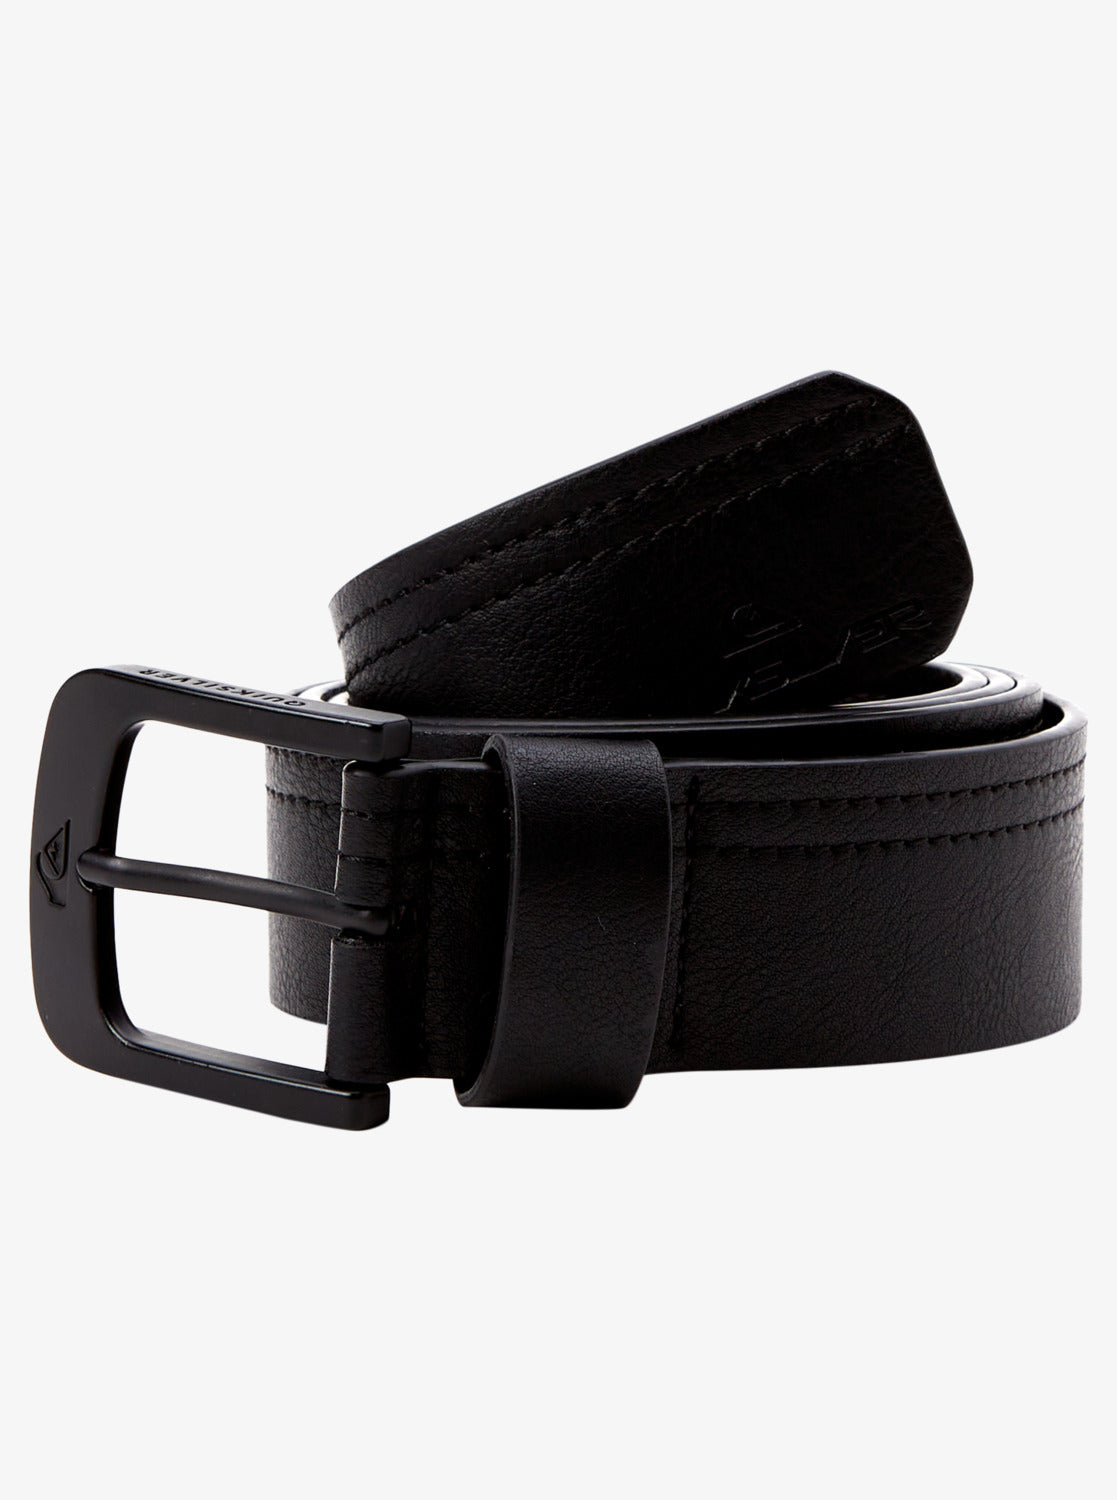 Stitchin Belt - Black